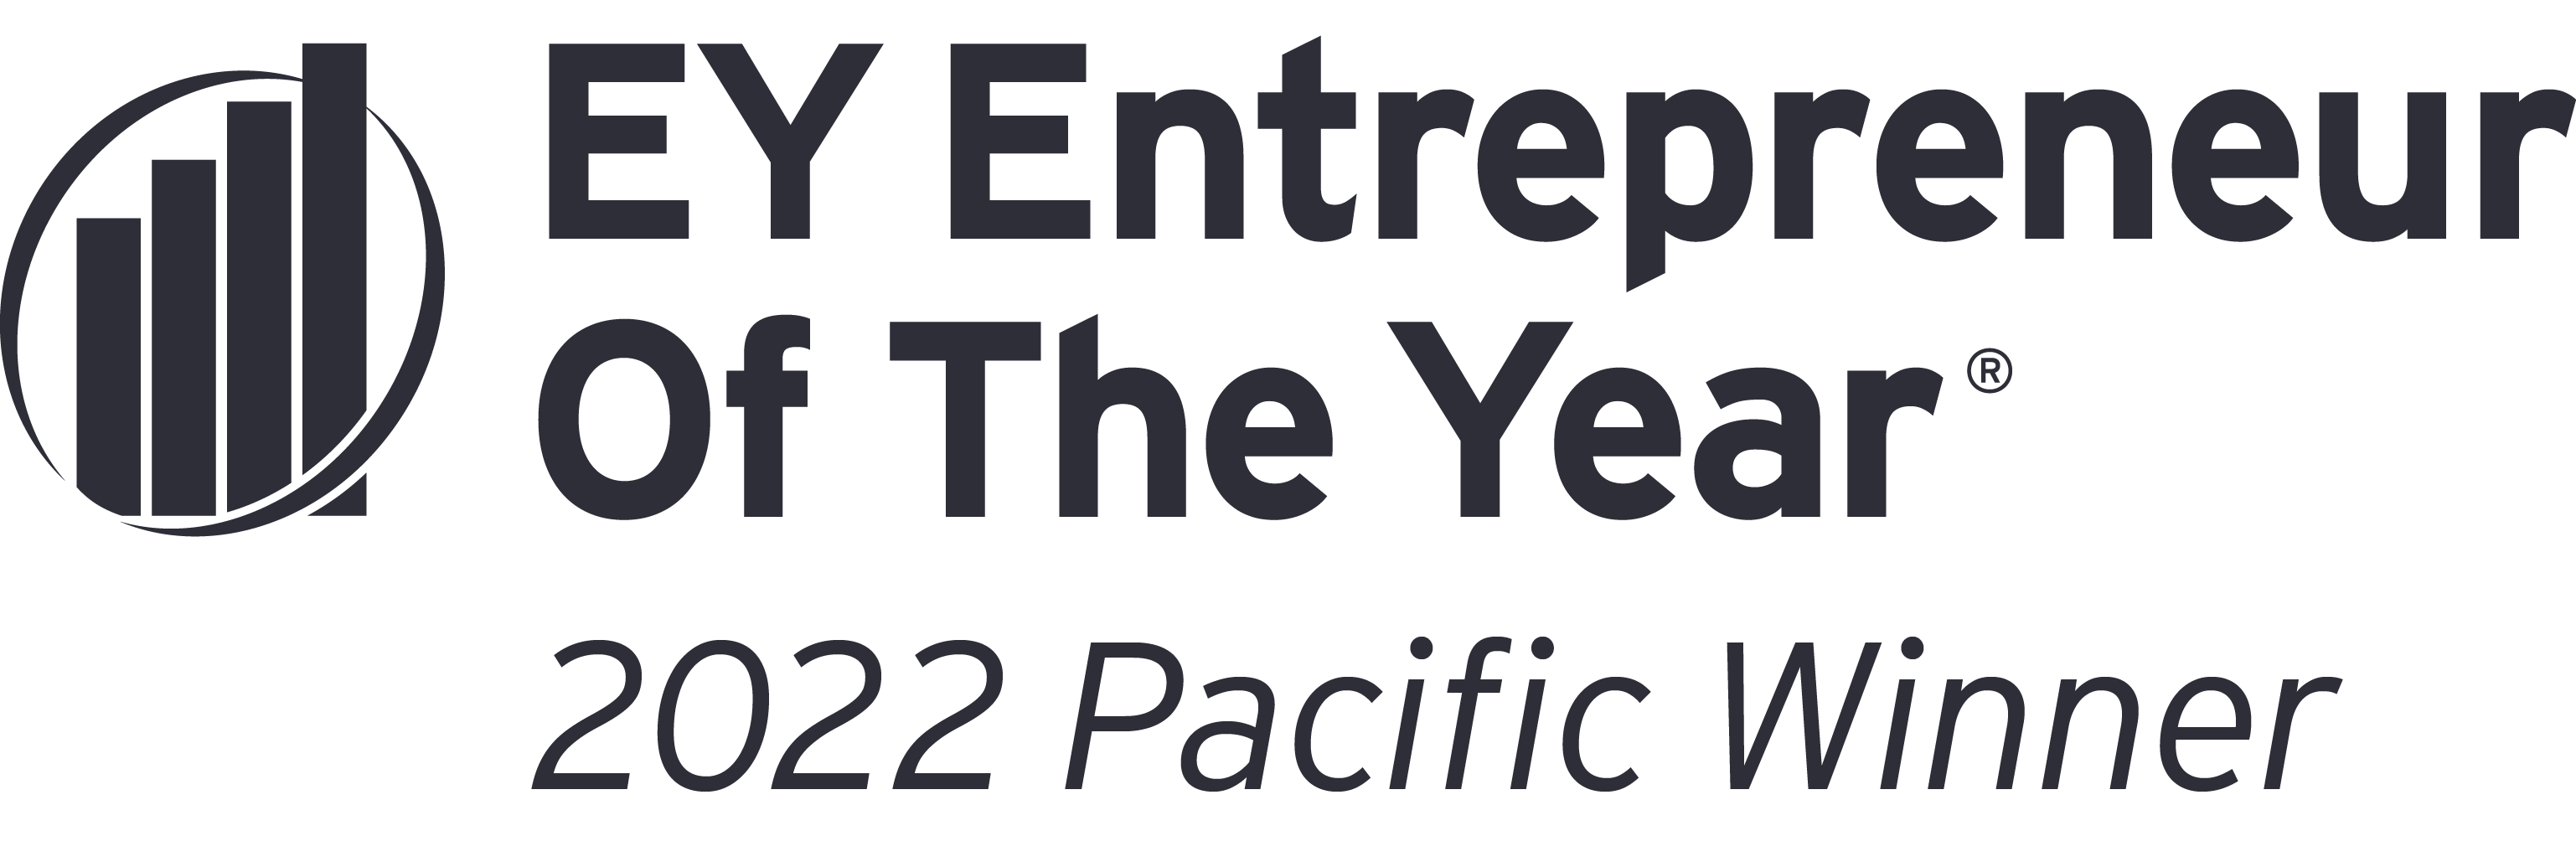 EY Entrepreneur of the Year 2022